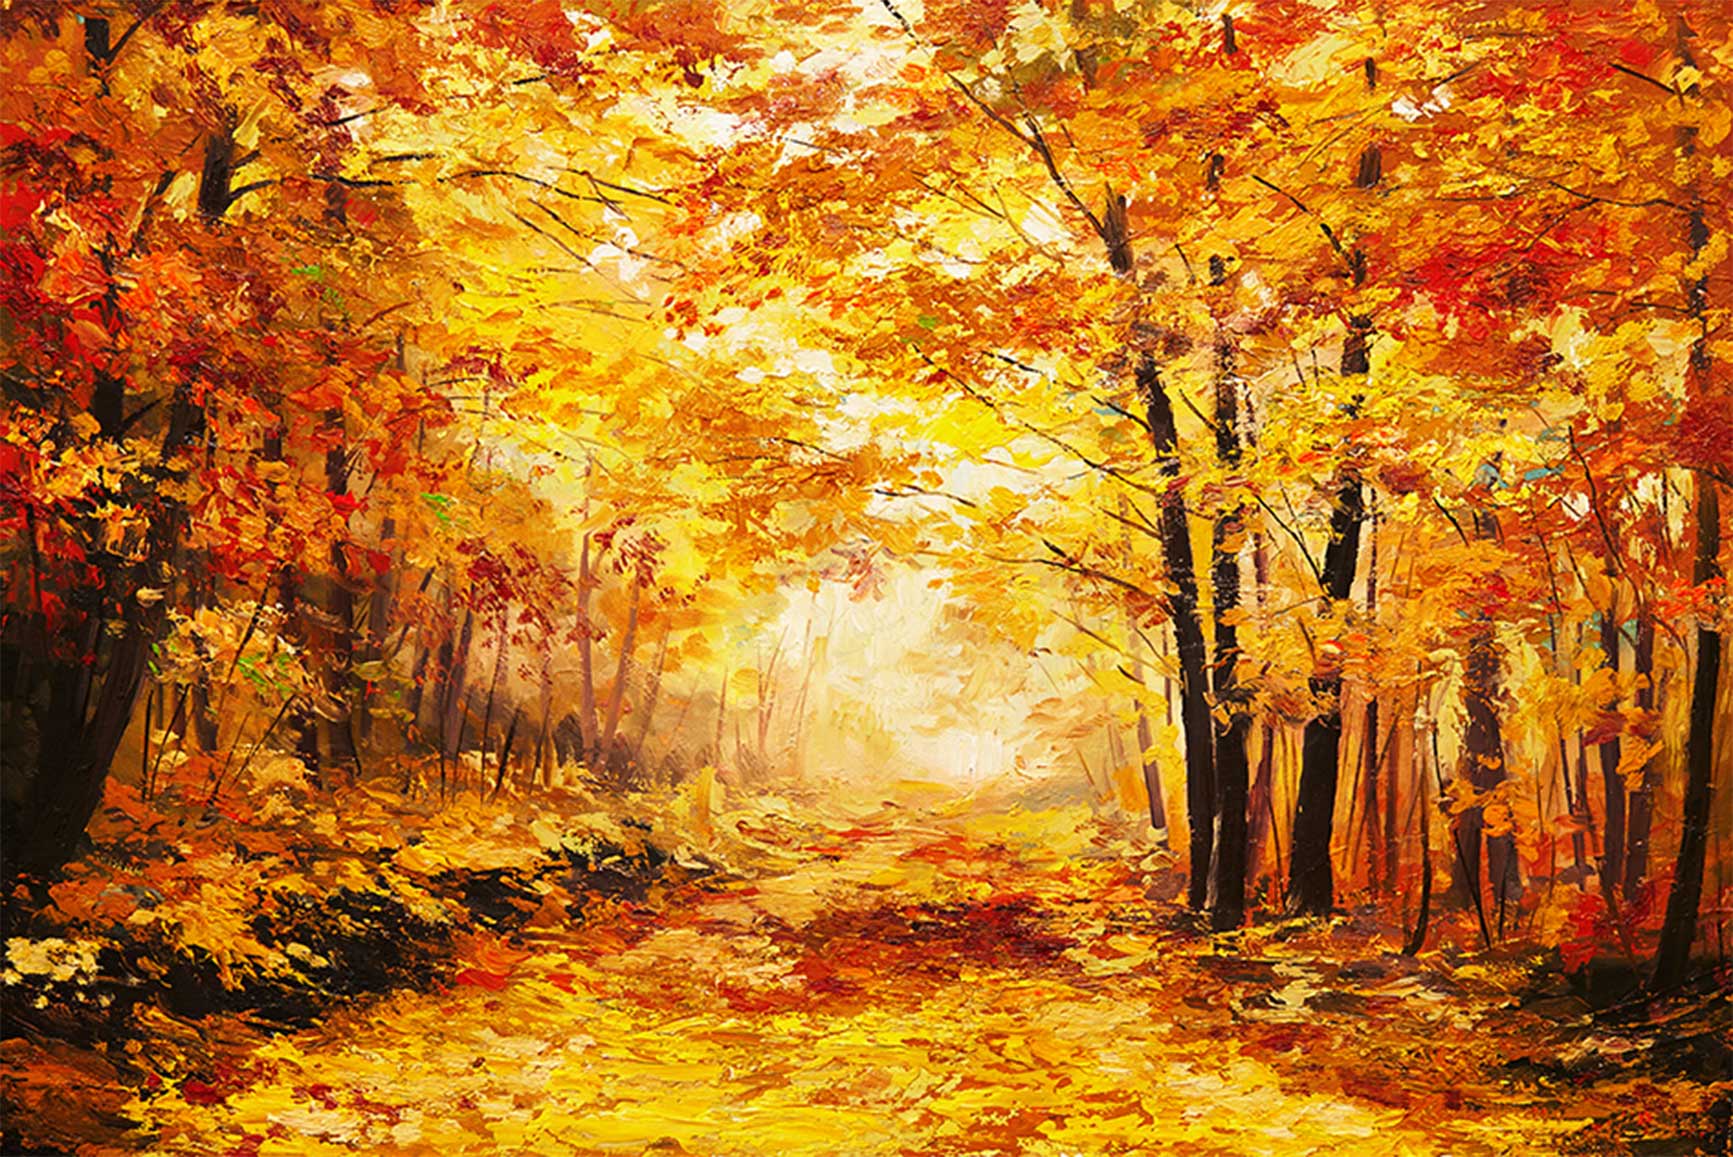 Quadro Retangular  - Trilha no outono (pintura)